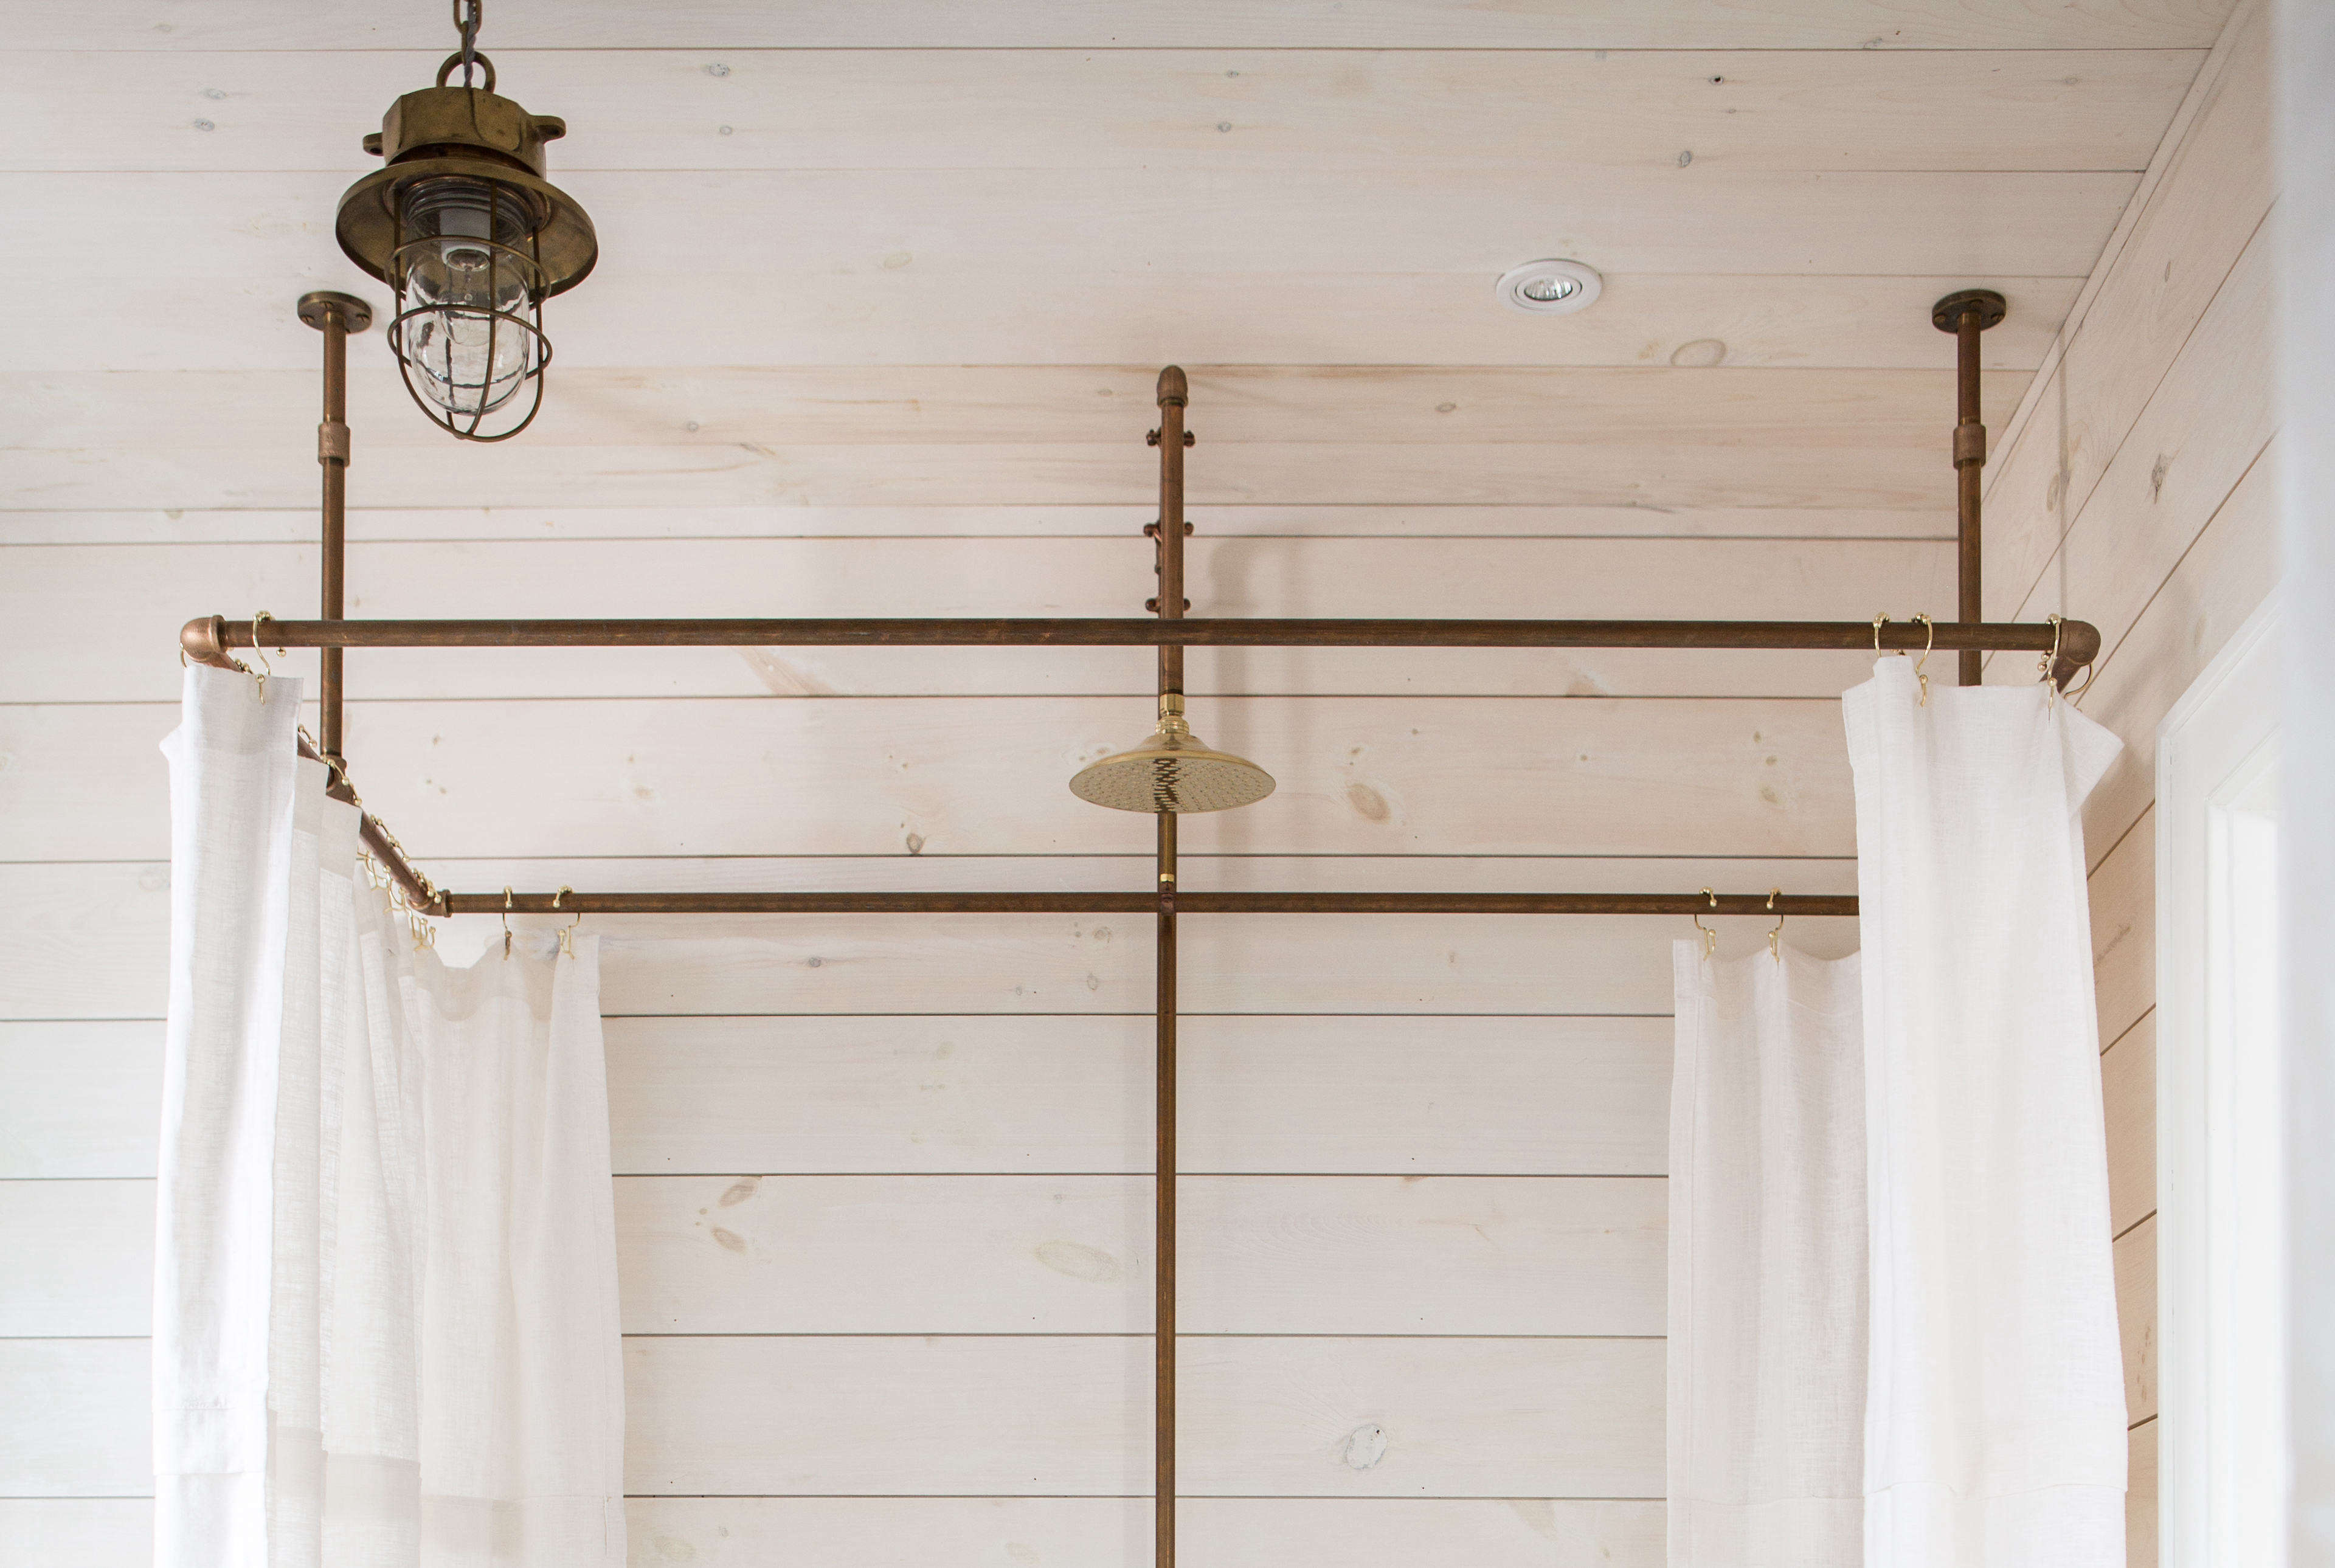 A Diy Shower Curtain Hoop Made From, Outdoor Circular Shower Curtain Rod